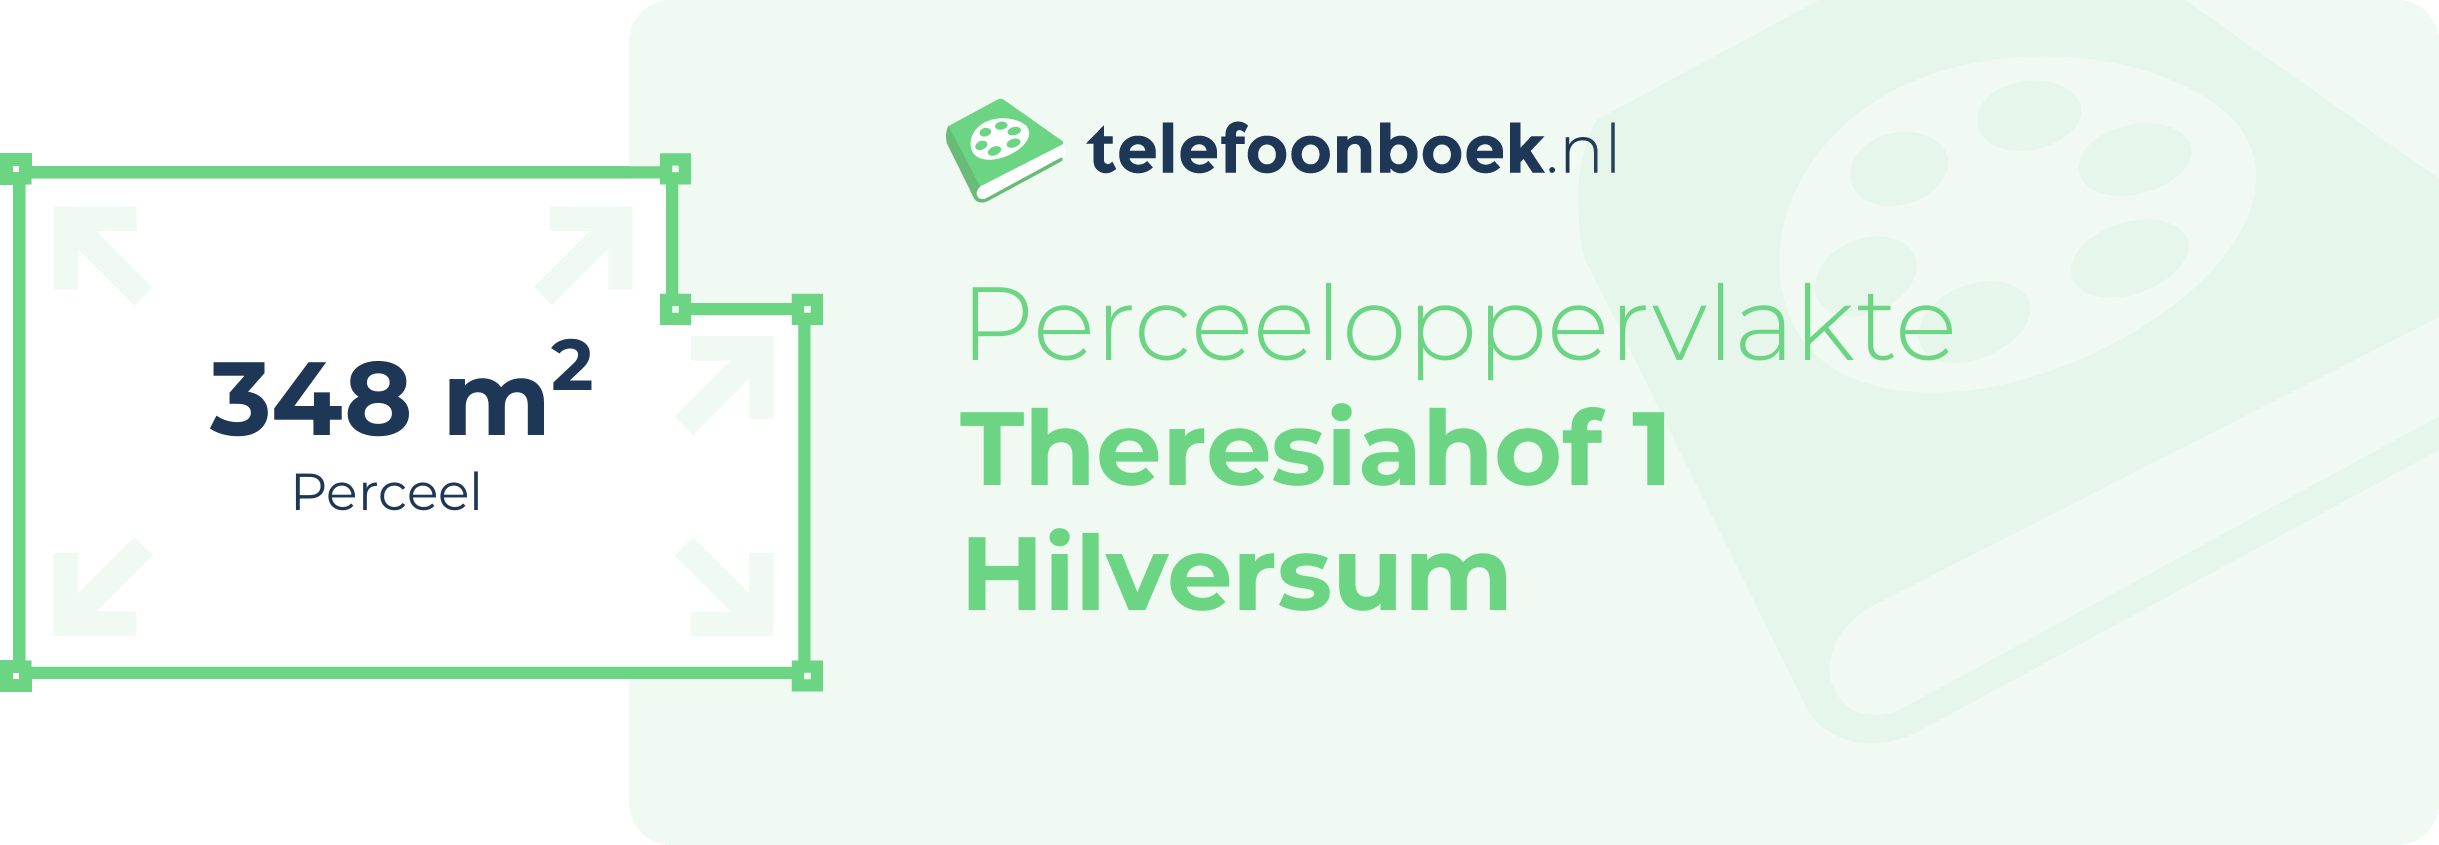 Perceeloppervlakte Theresiahof 1 Hilversum